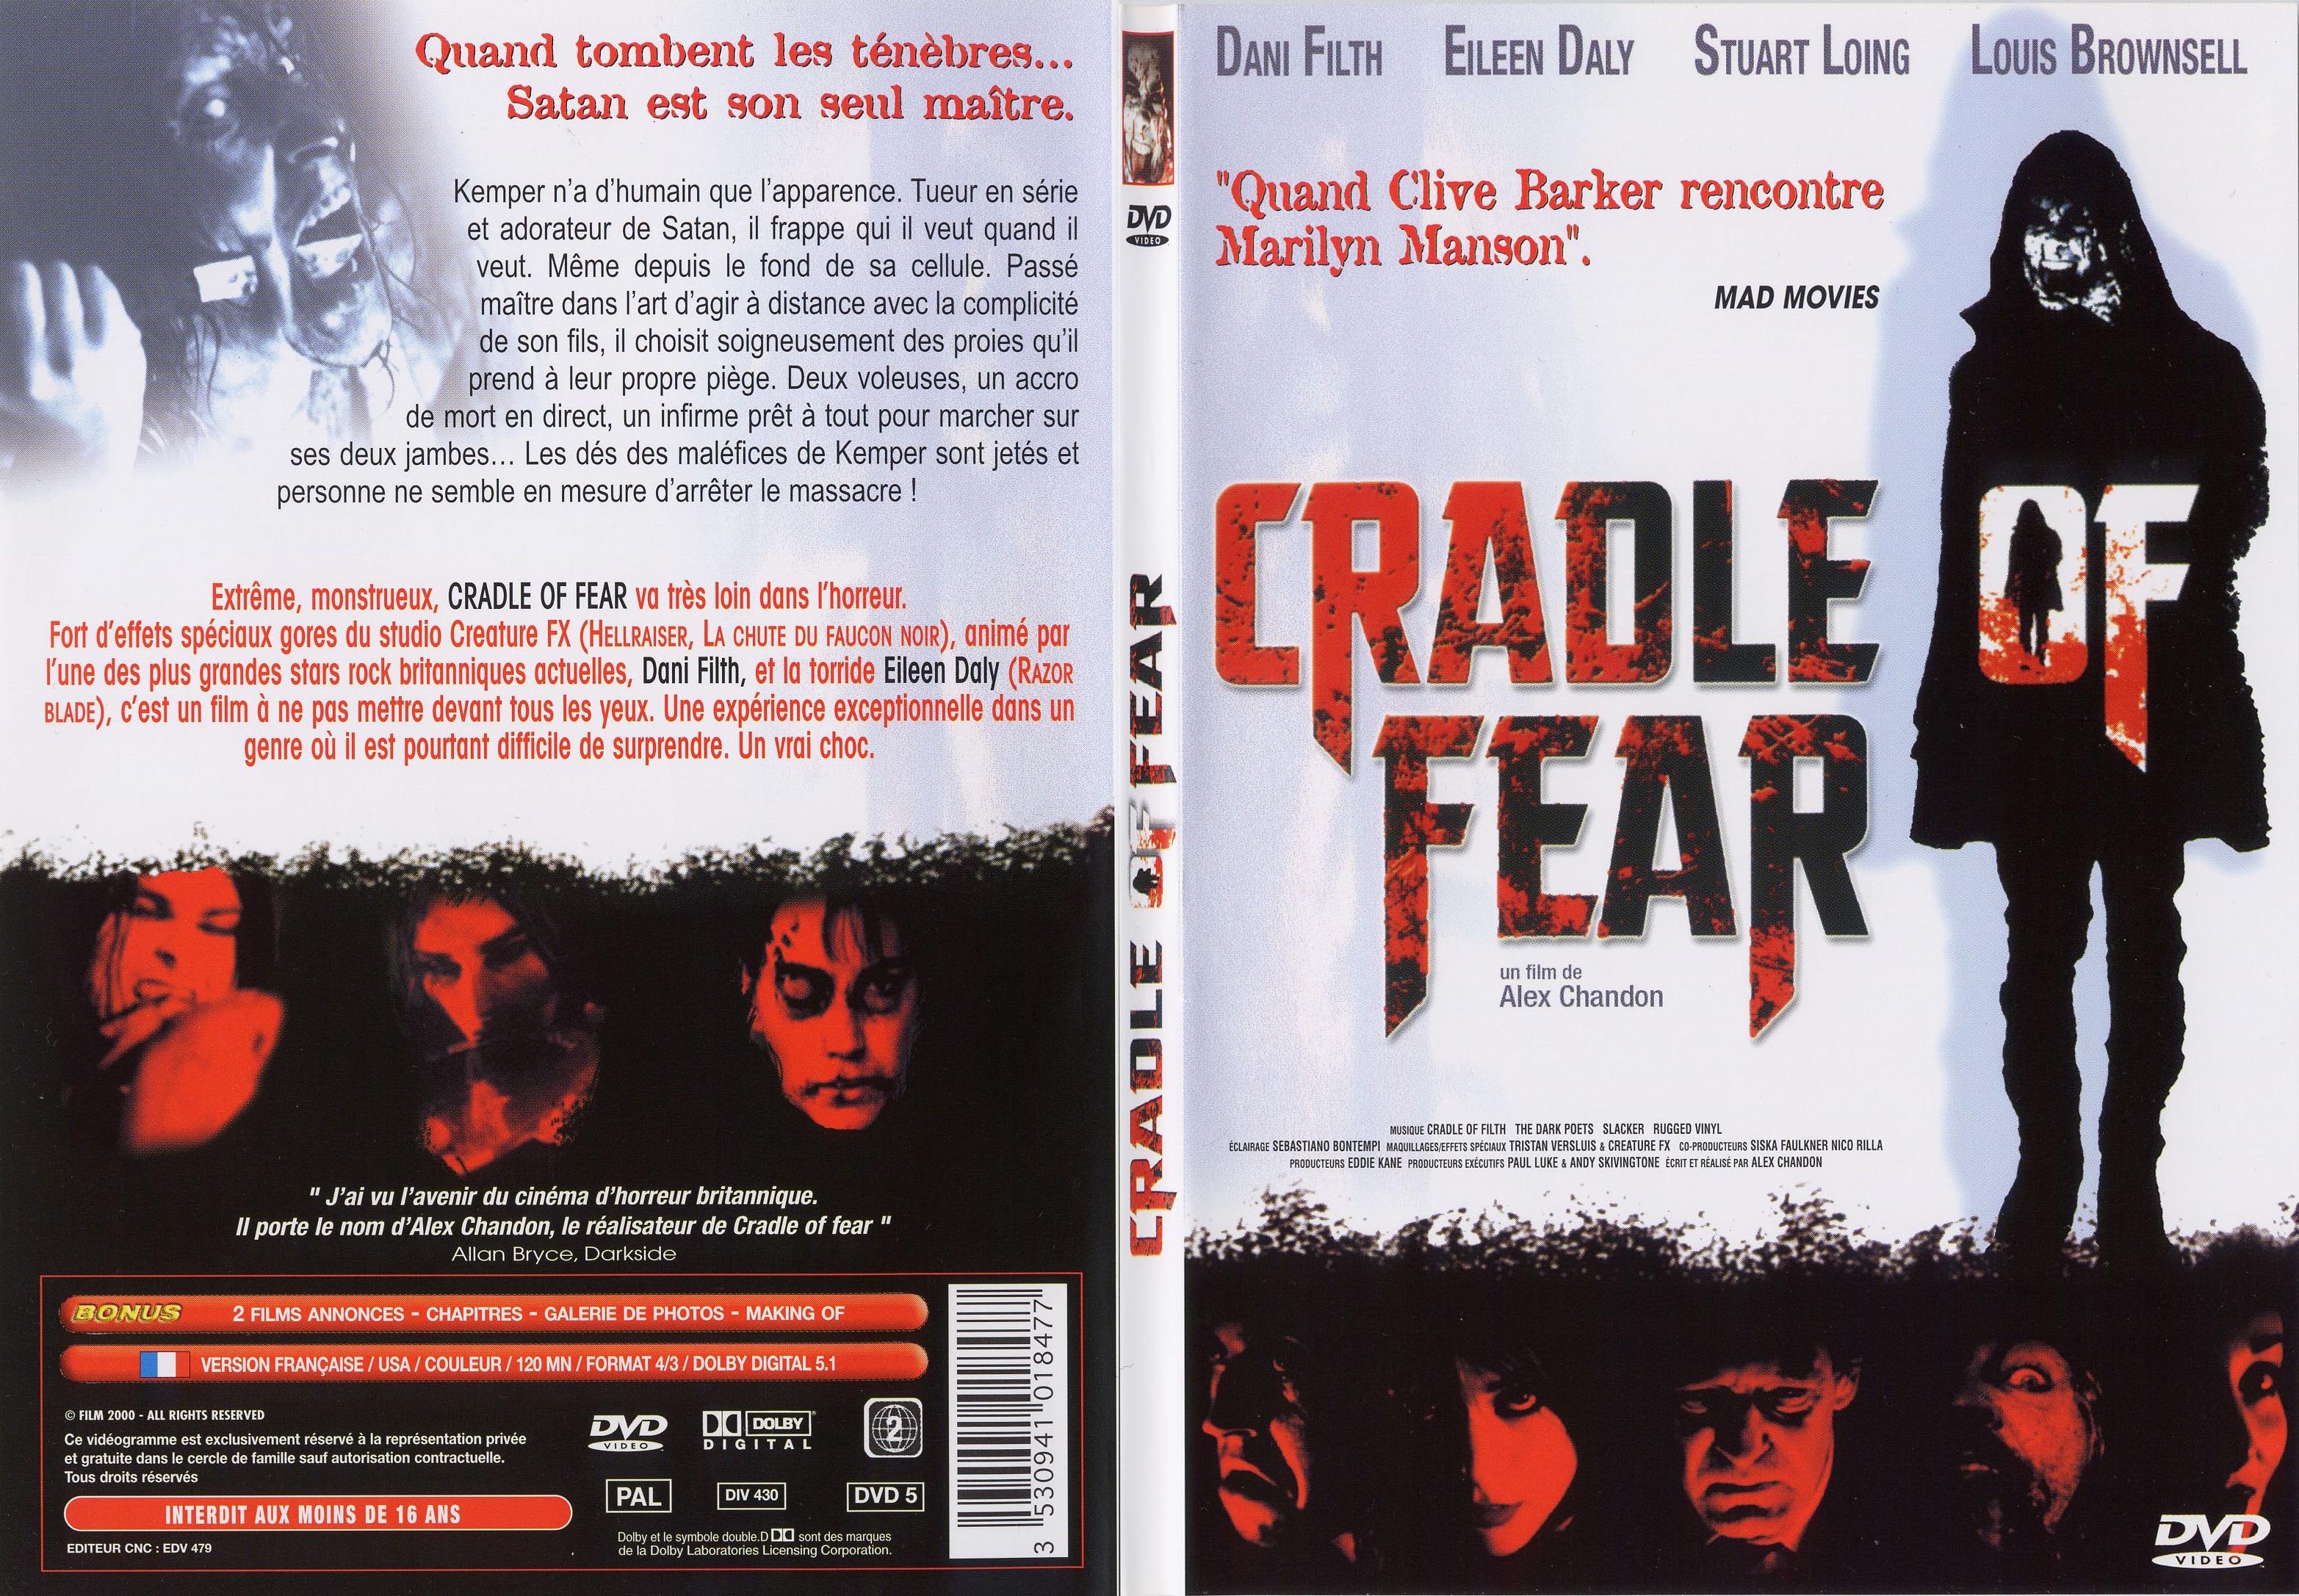 Jaquette DVD Cradle of fear - SLIM